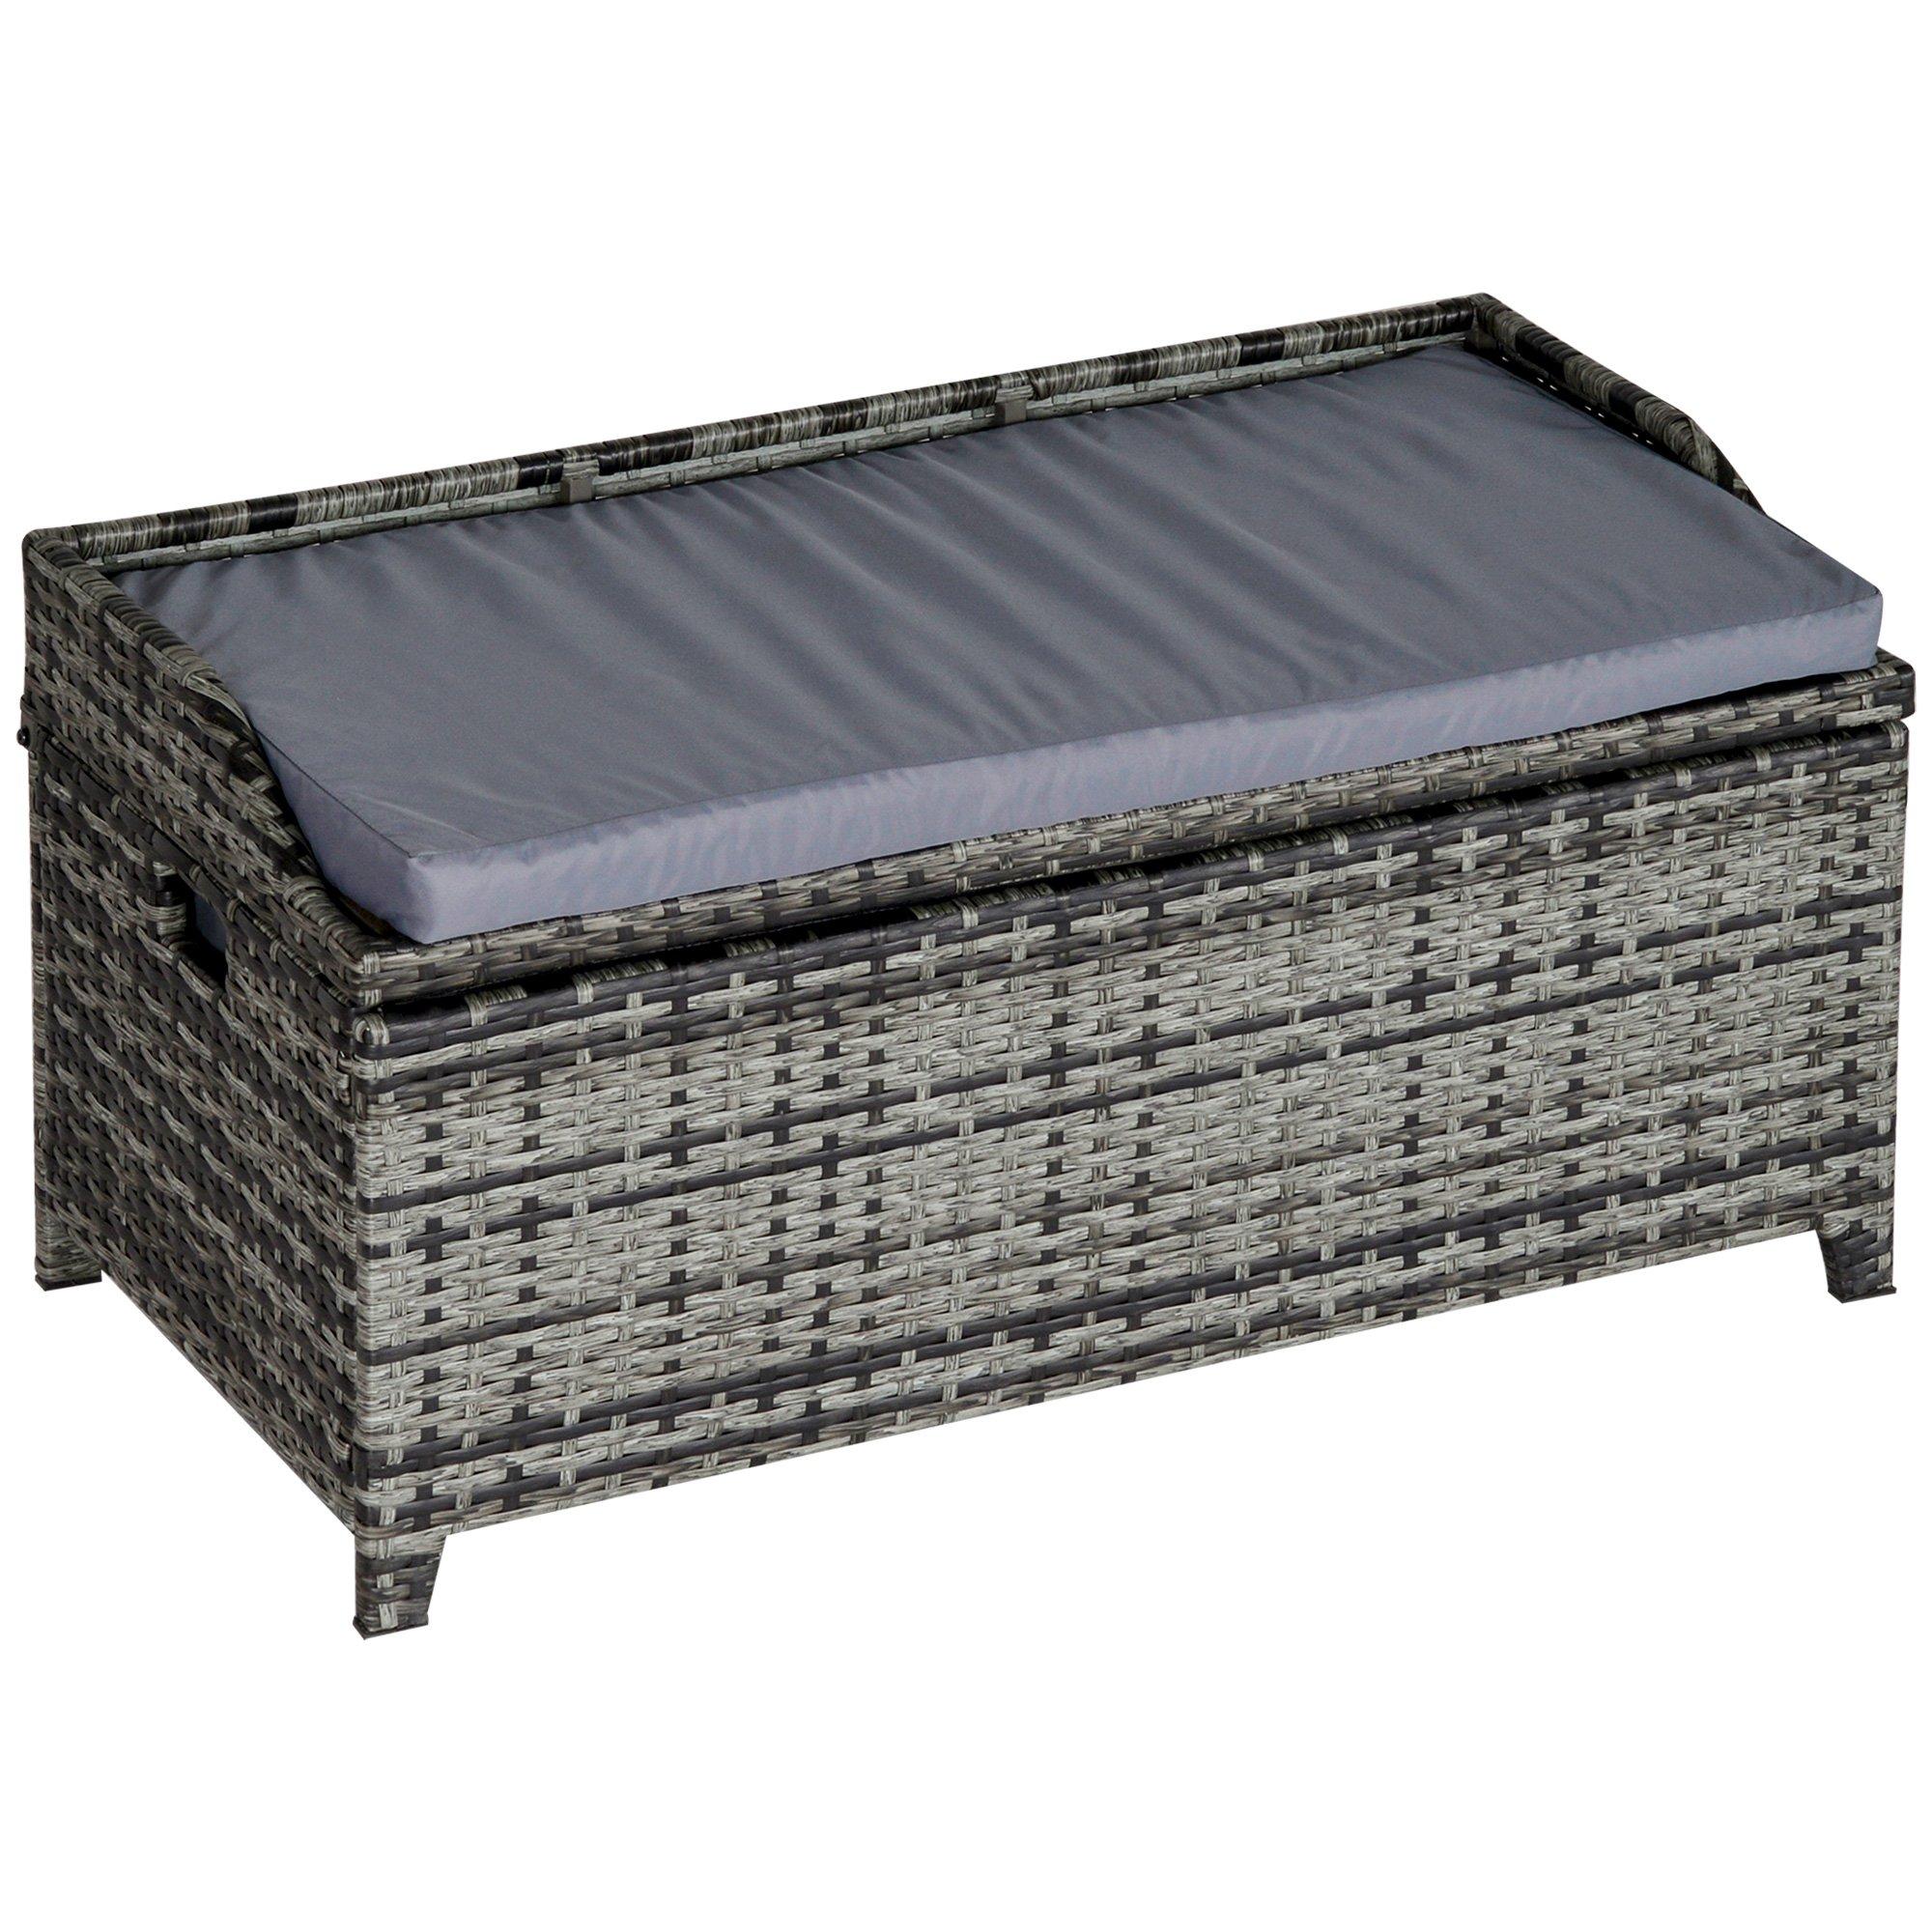 Patio PE Rattan Wicker Storage Basket Box Bench Seat Furniture with Cushion